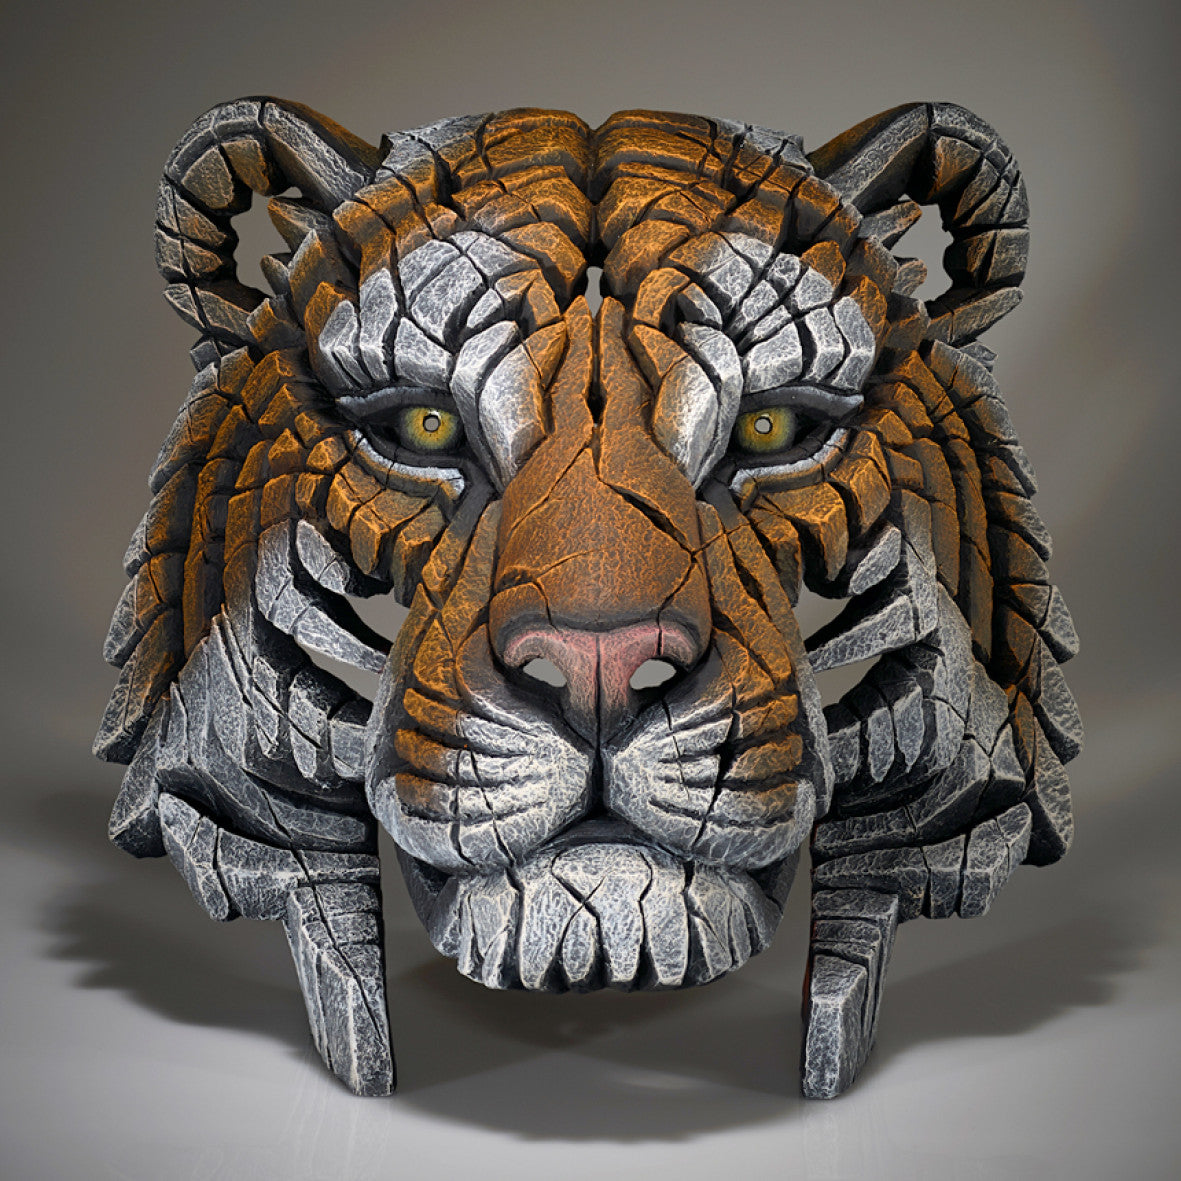 Edge Tiger Bust by Matt Buckley